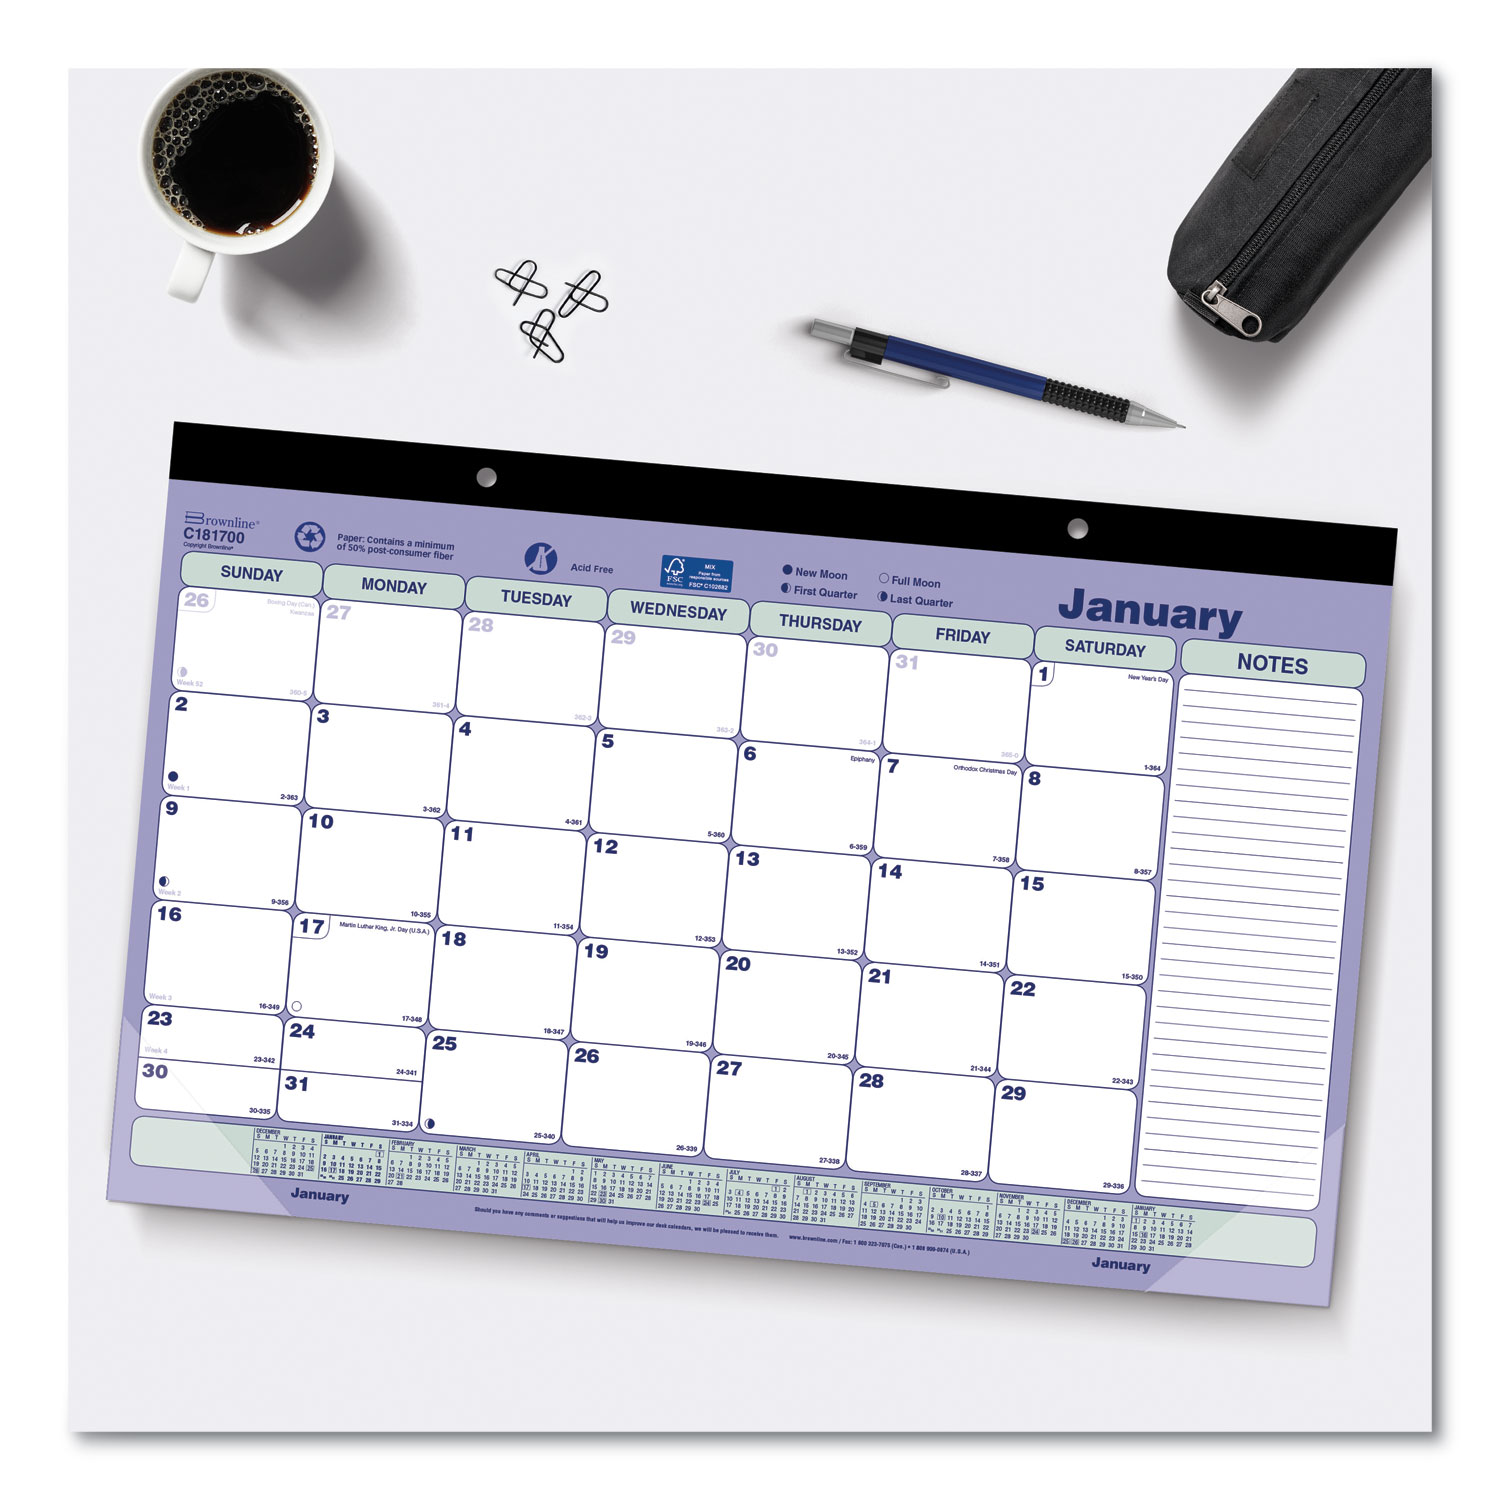 REDC181700 Brownline® Monthly Desk Pad Calendar - Zuma